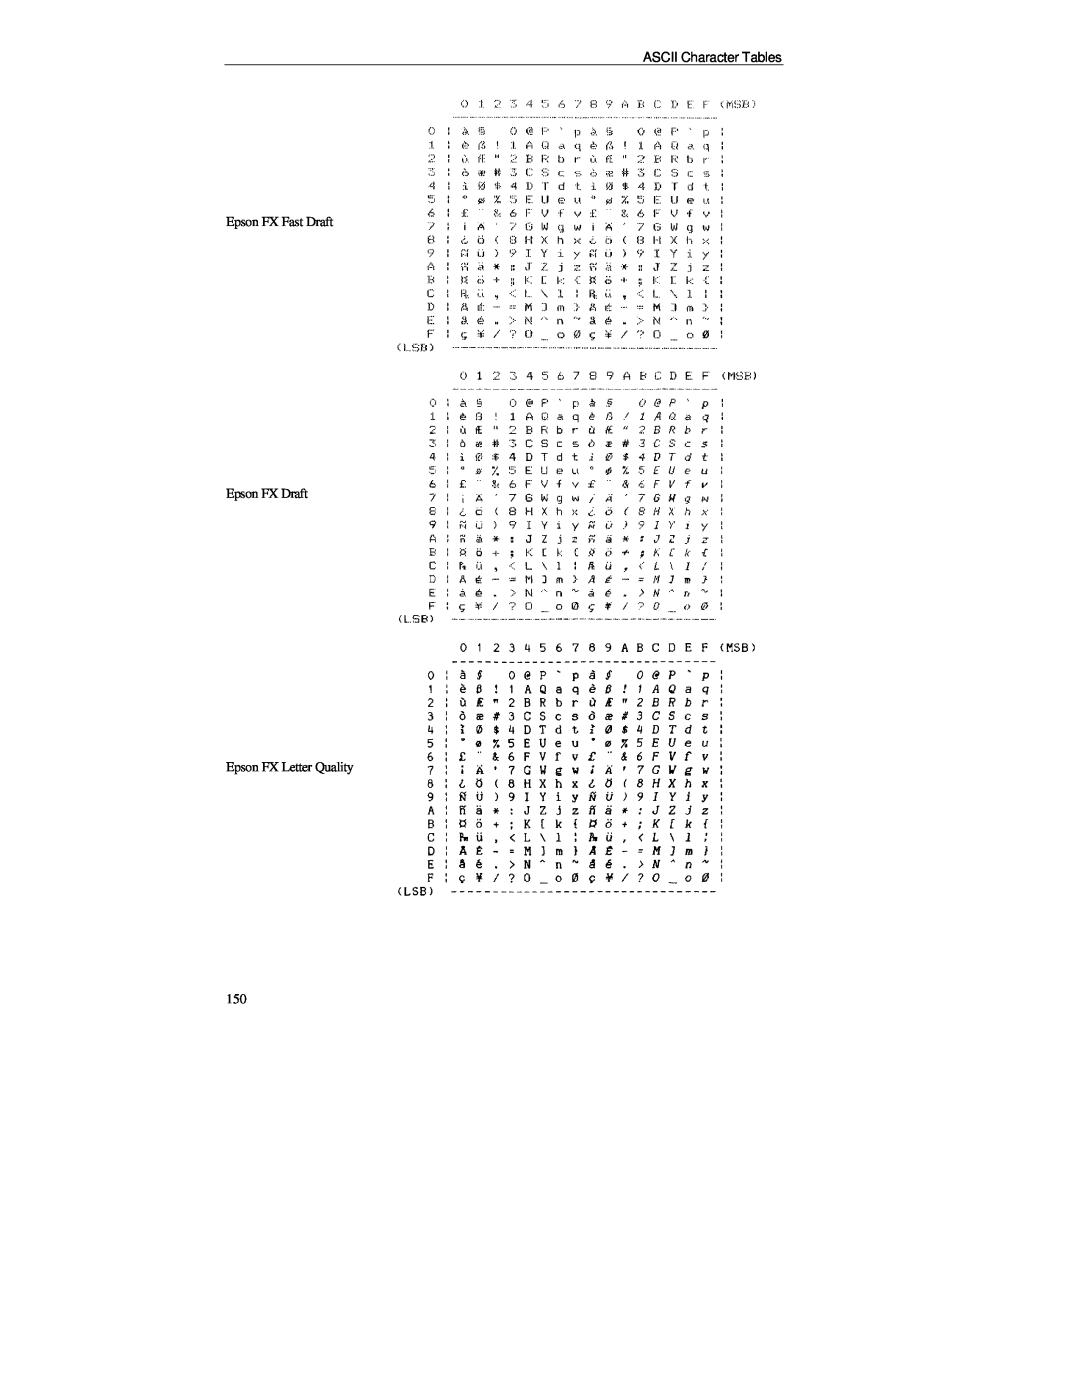 Printek PrintMaster 850 Series manual ASCII Character Tables, Epson FX Fast Draft Epson FX Draft Epson FX Letter Quality 